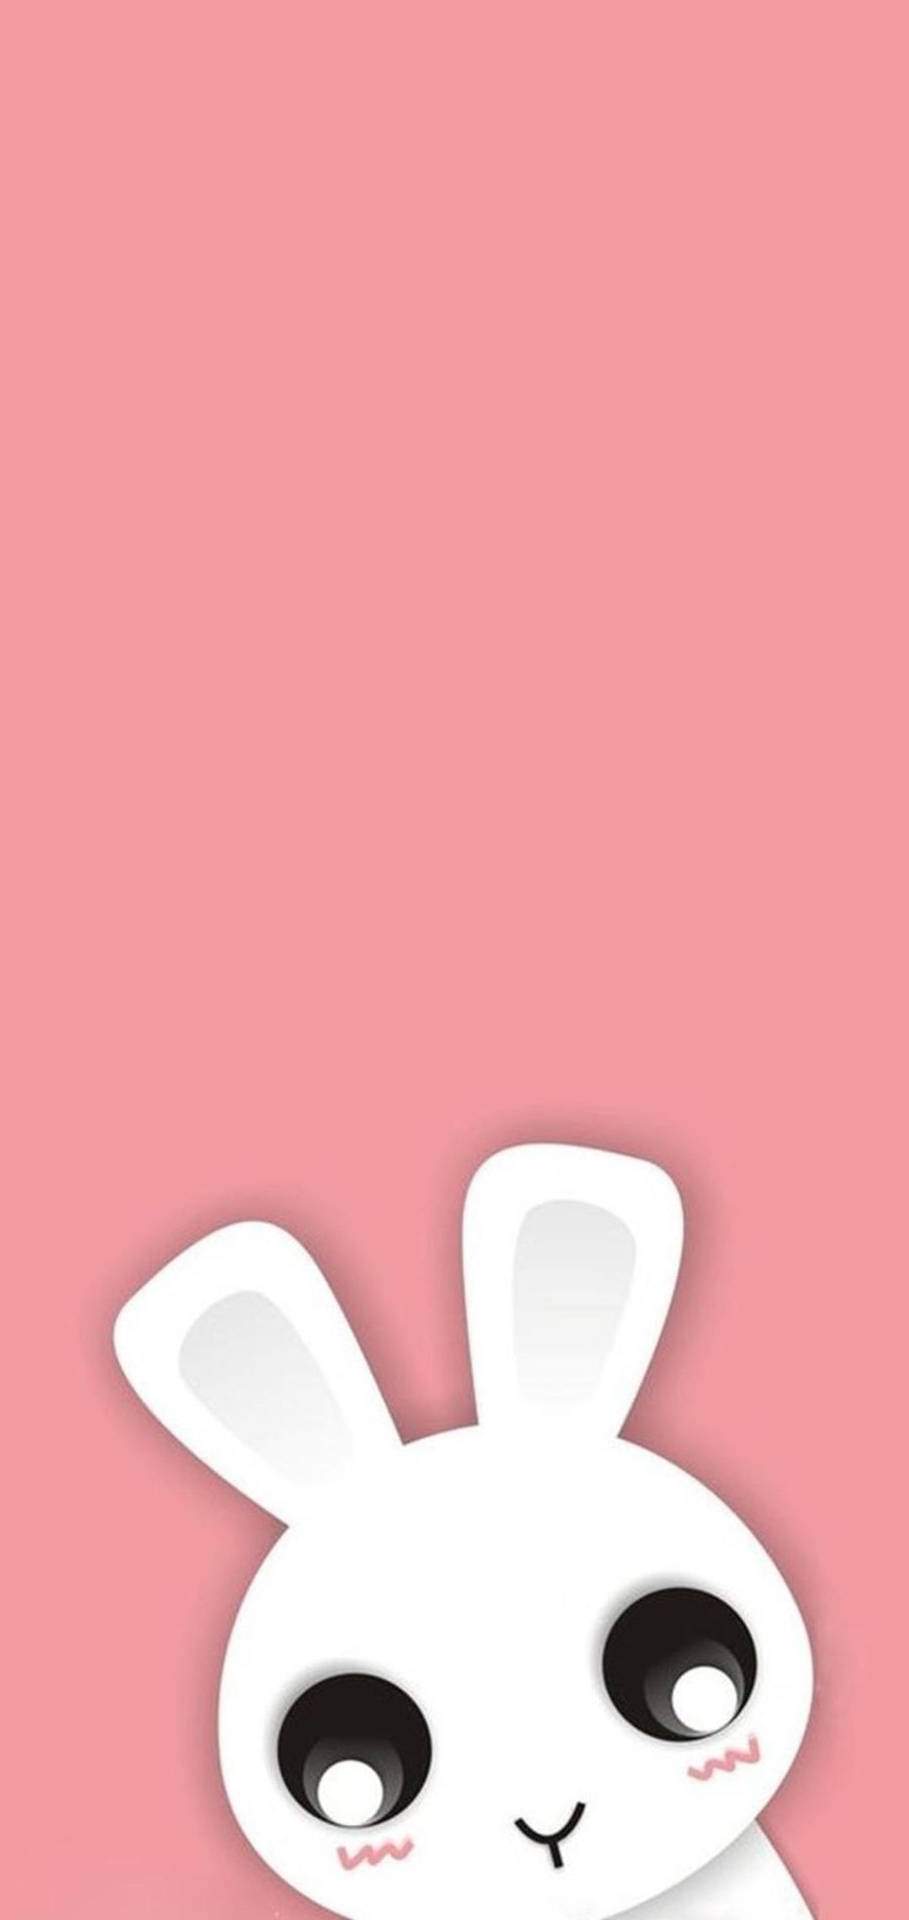 Big-eyed Bunny Cute Iphone Background